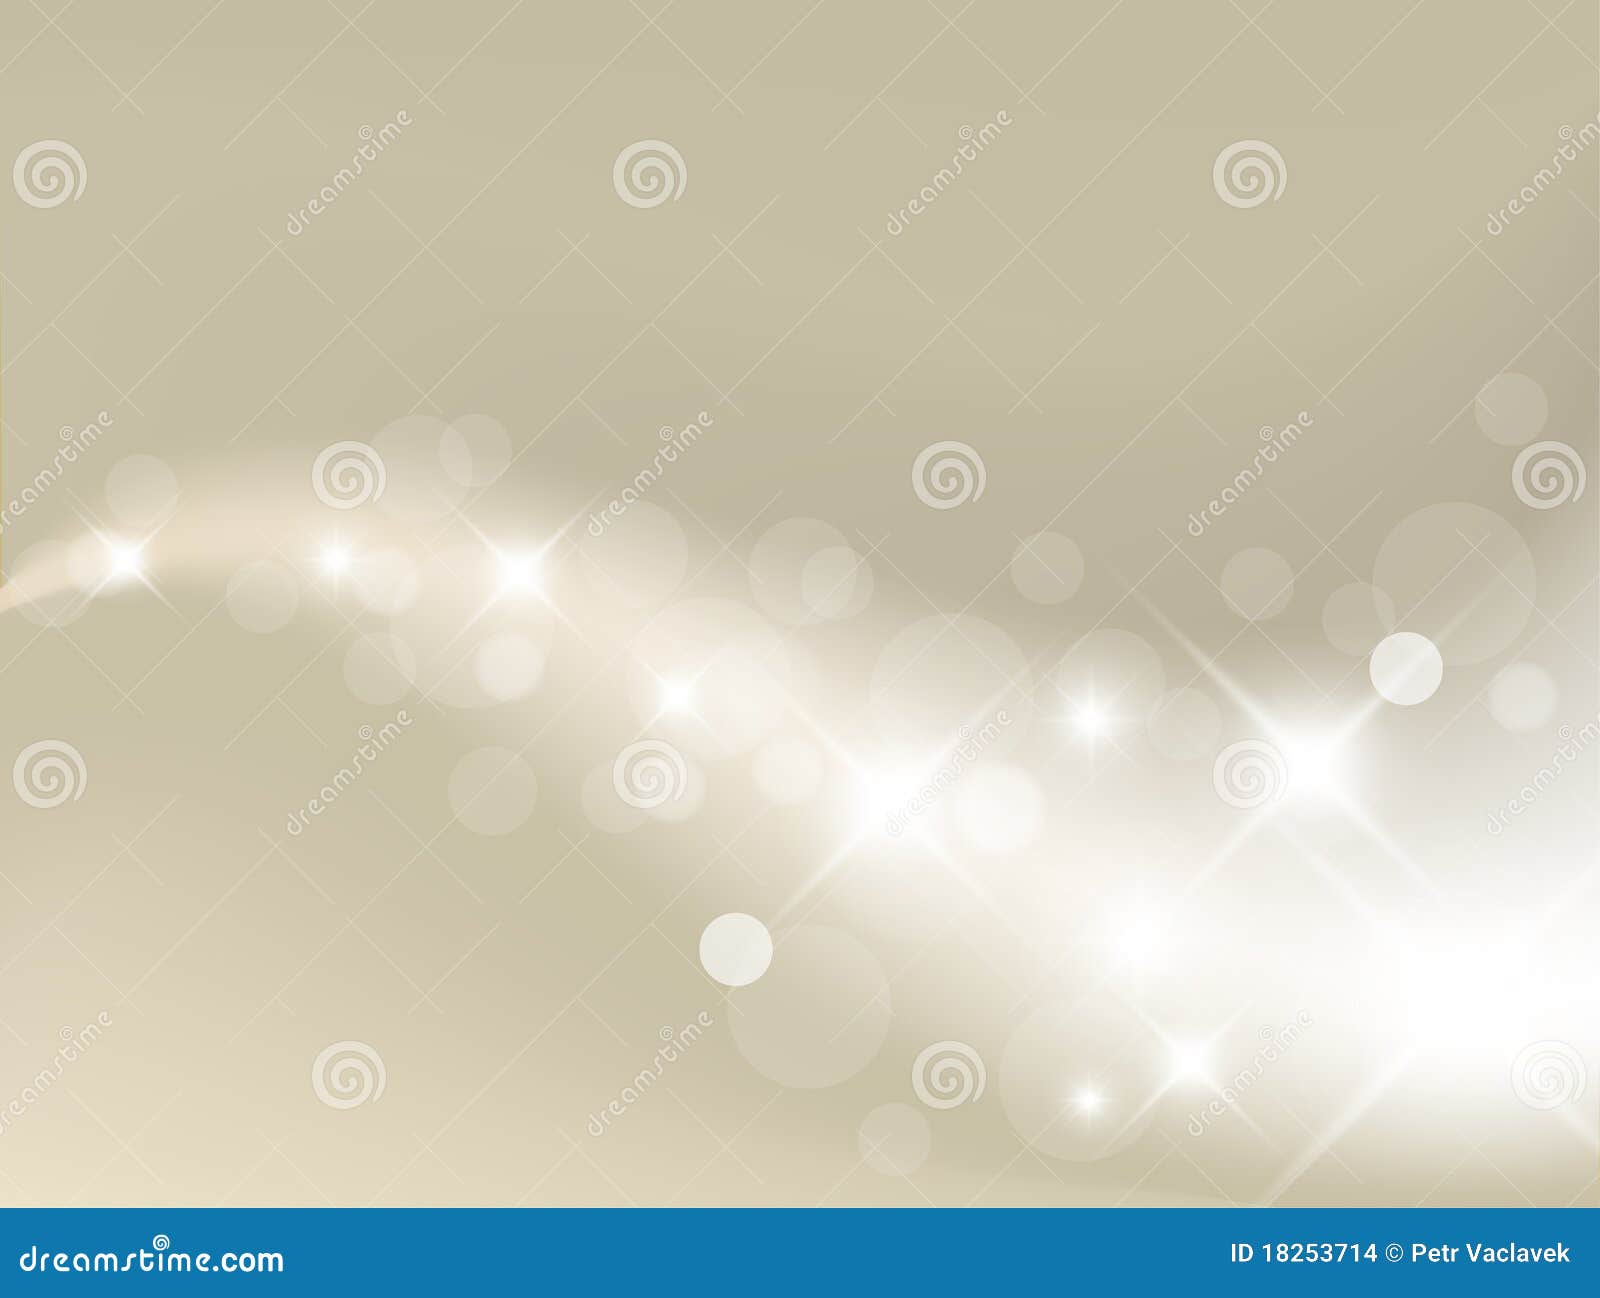 Light Silver Abstract Background Stock Illustration - Illustration of